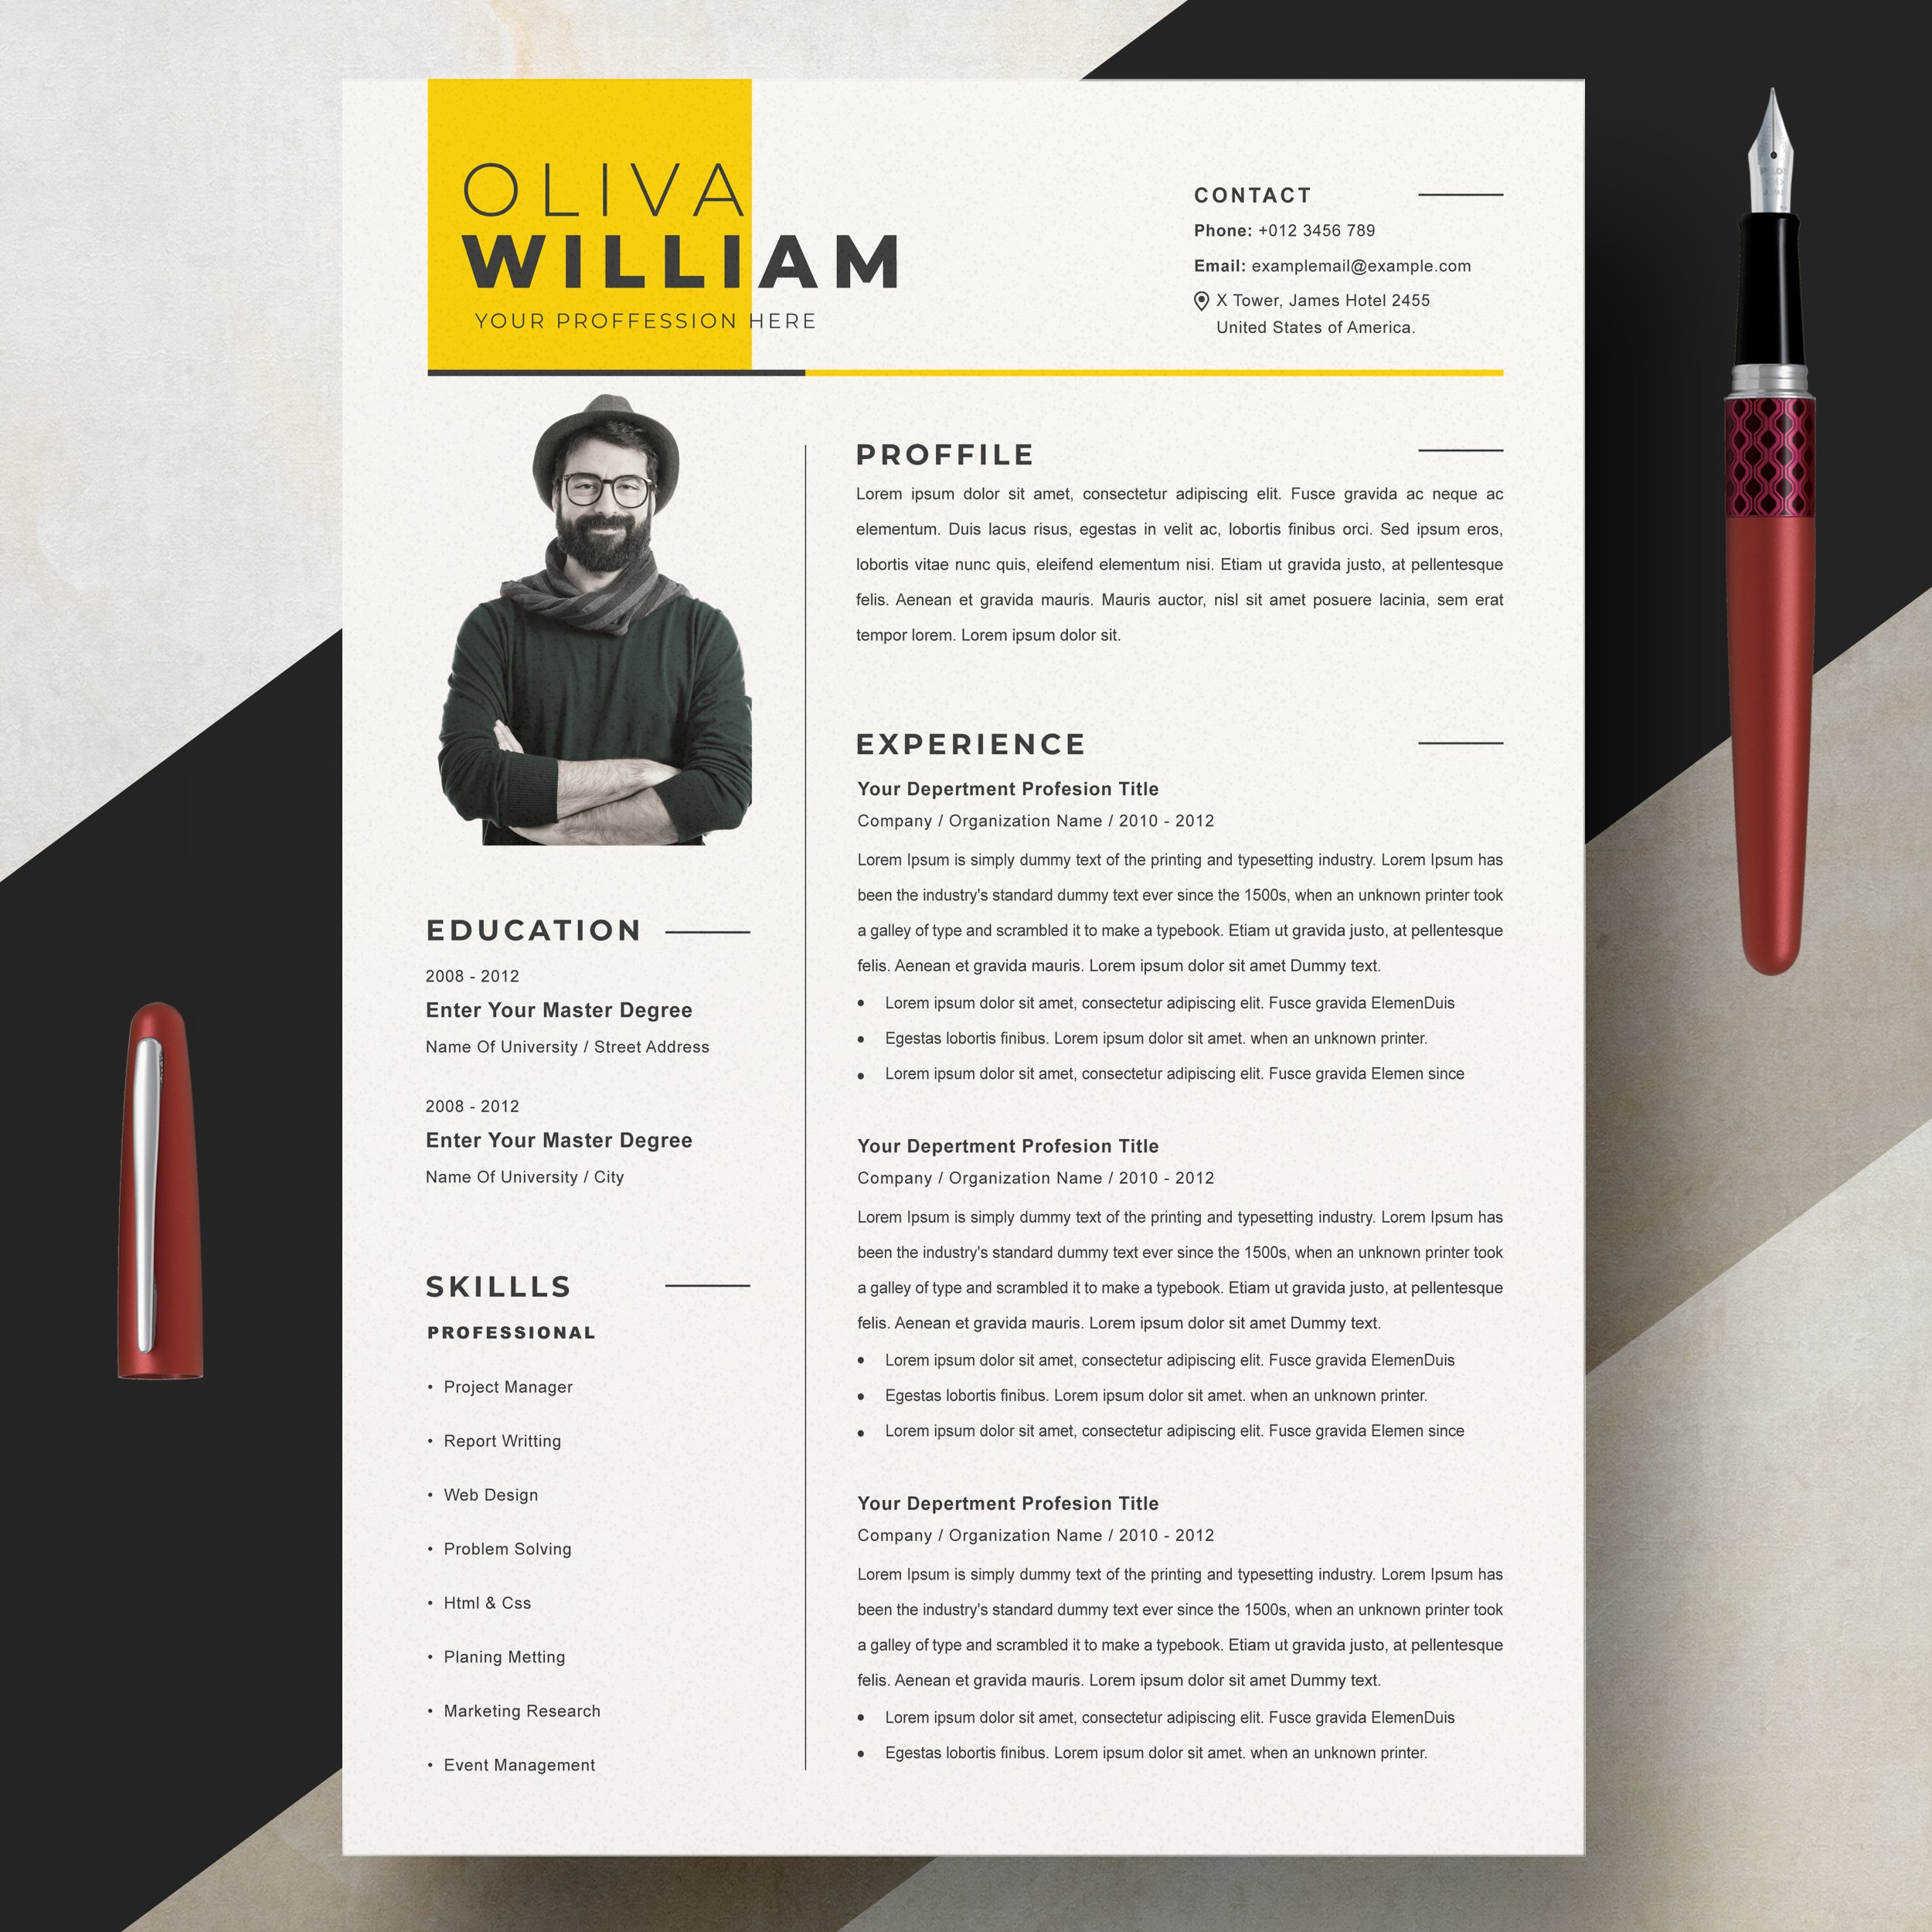 CV Template | Professional CV cover image.